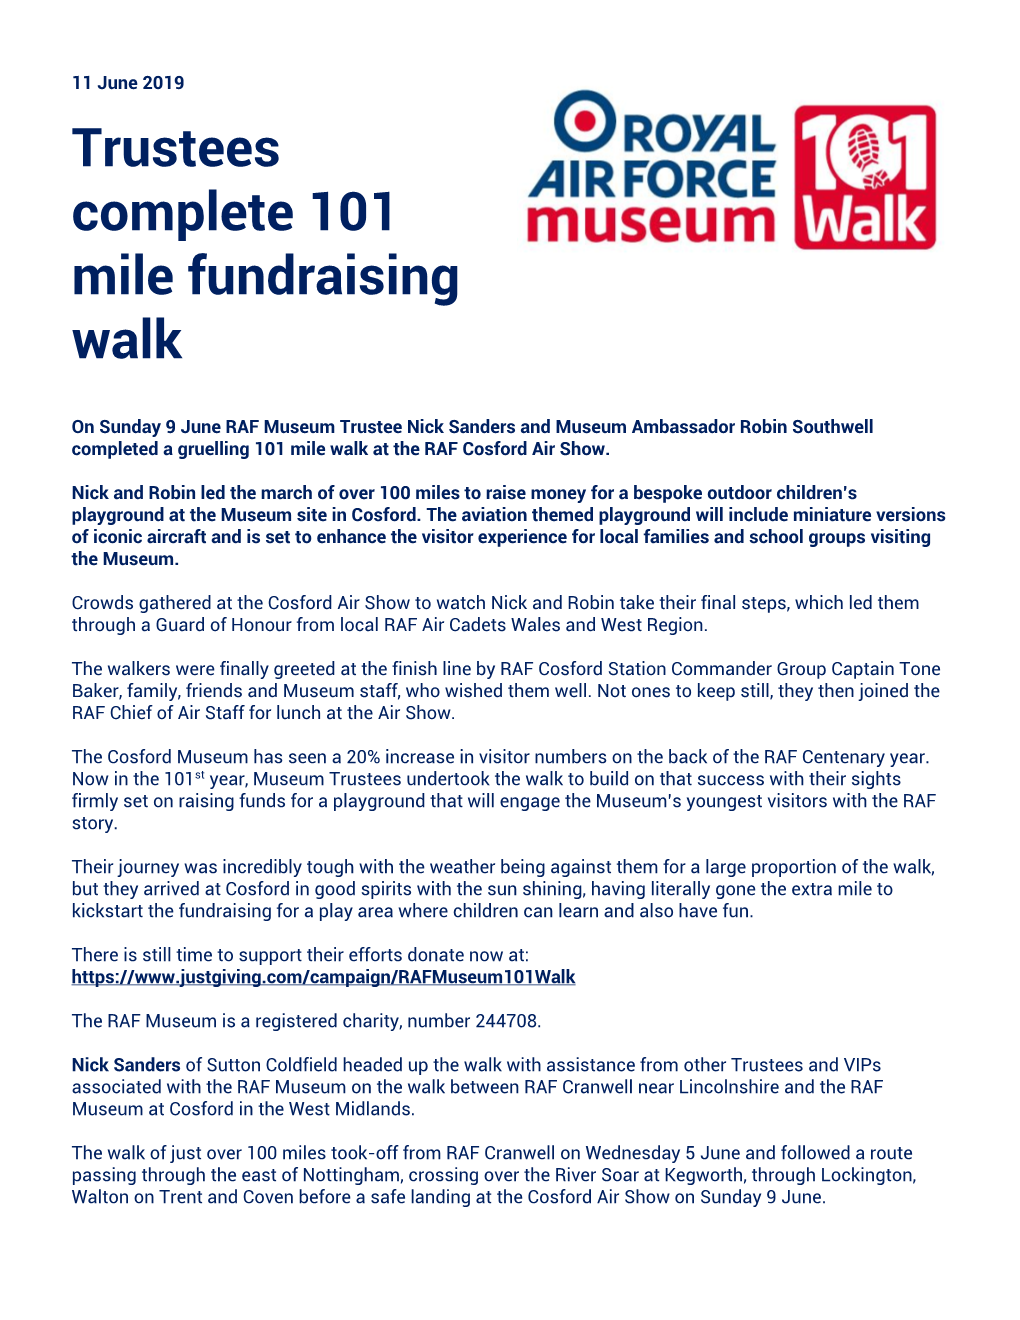 Trustees Complete 101 Mile Fundraising Walk